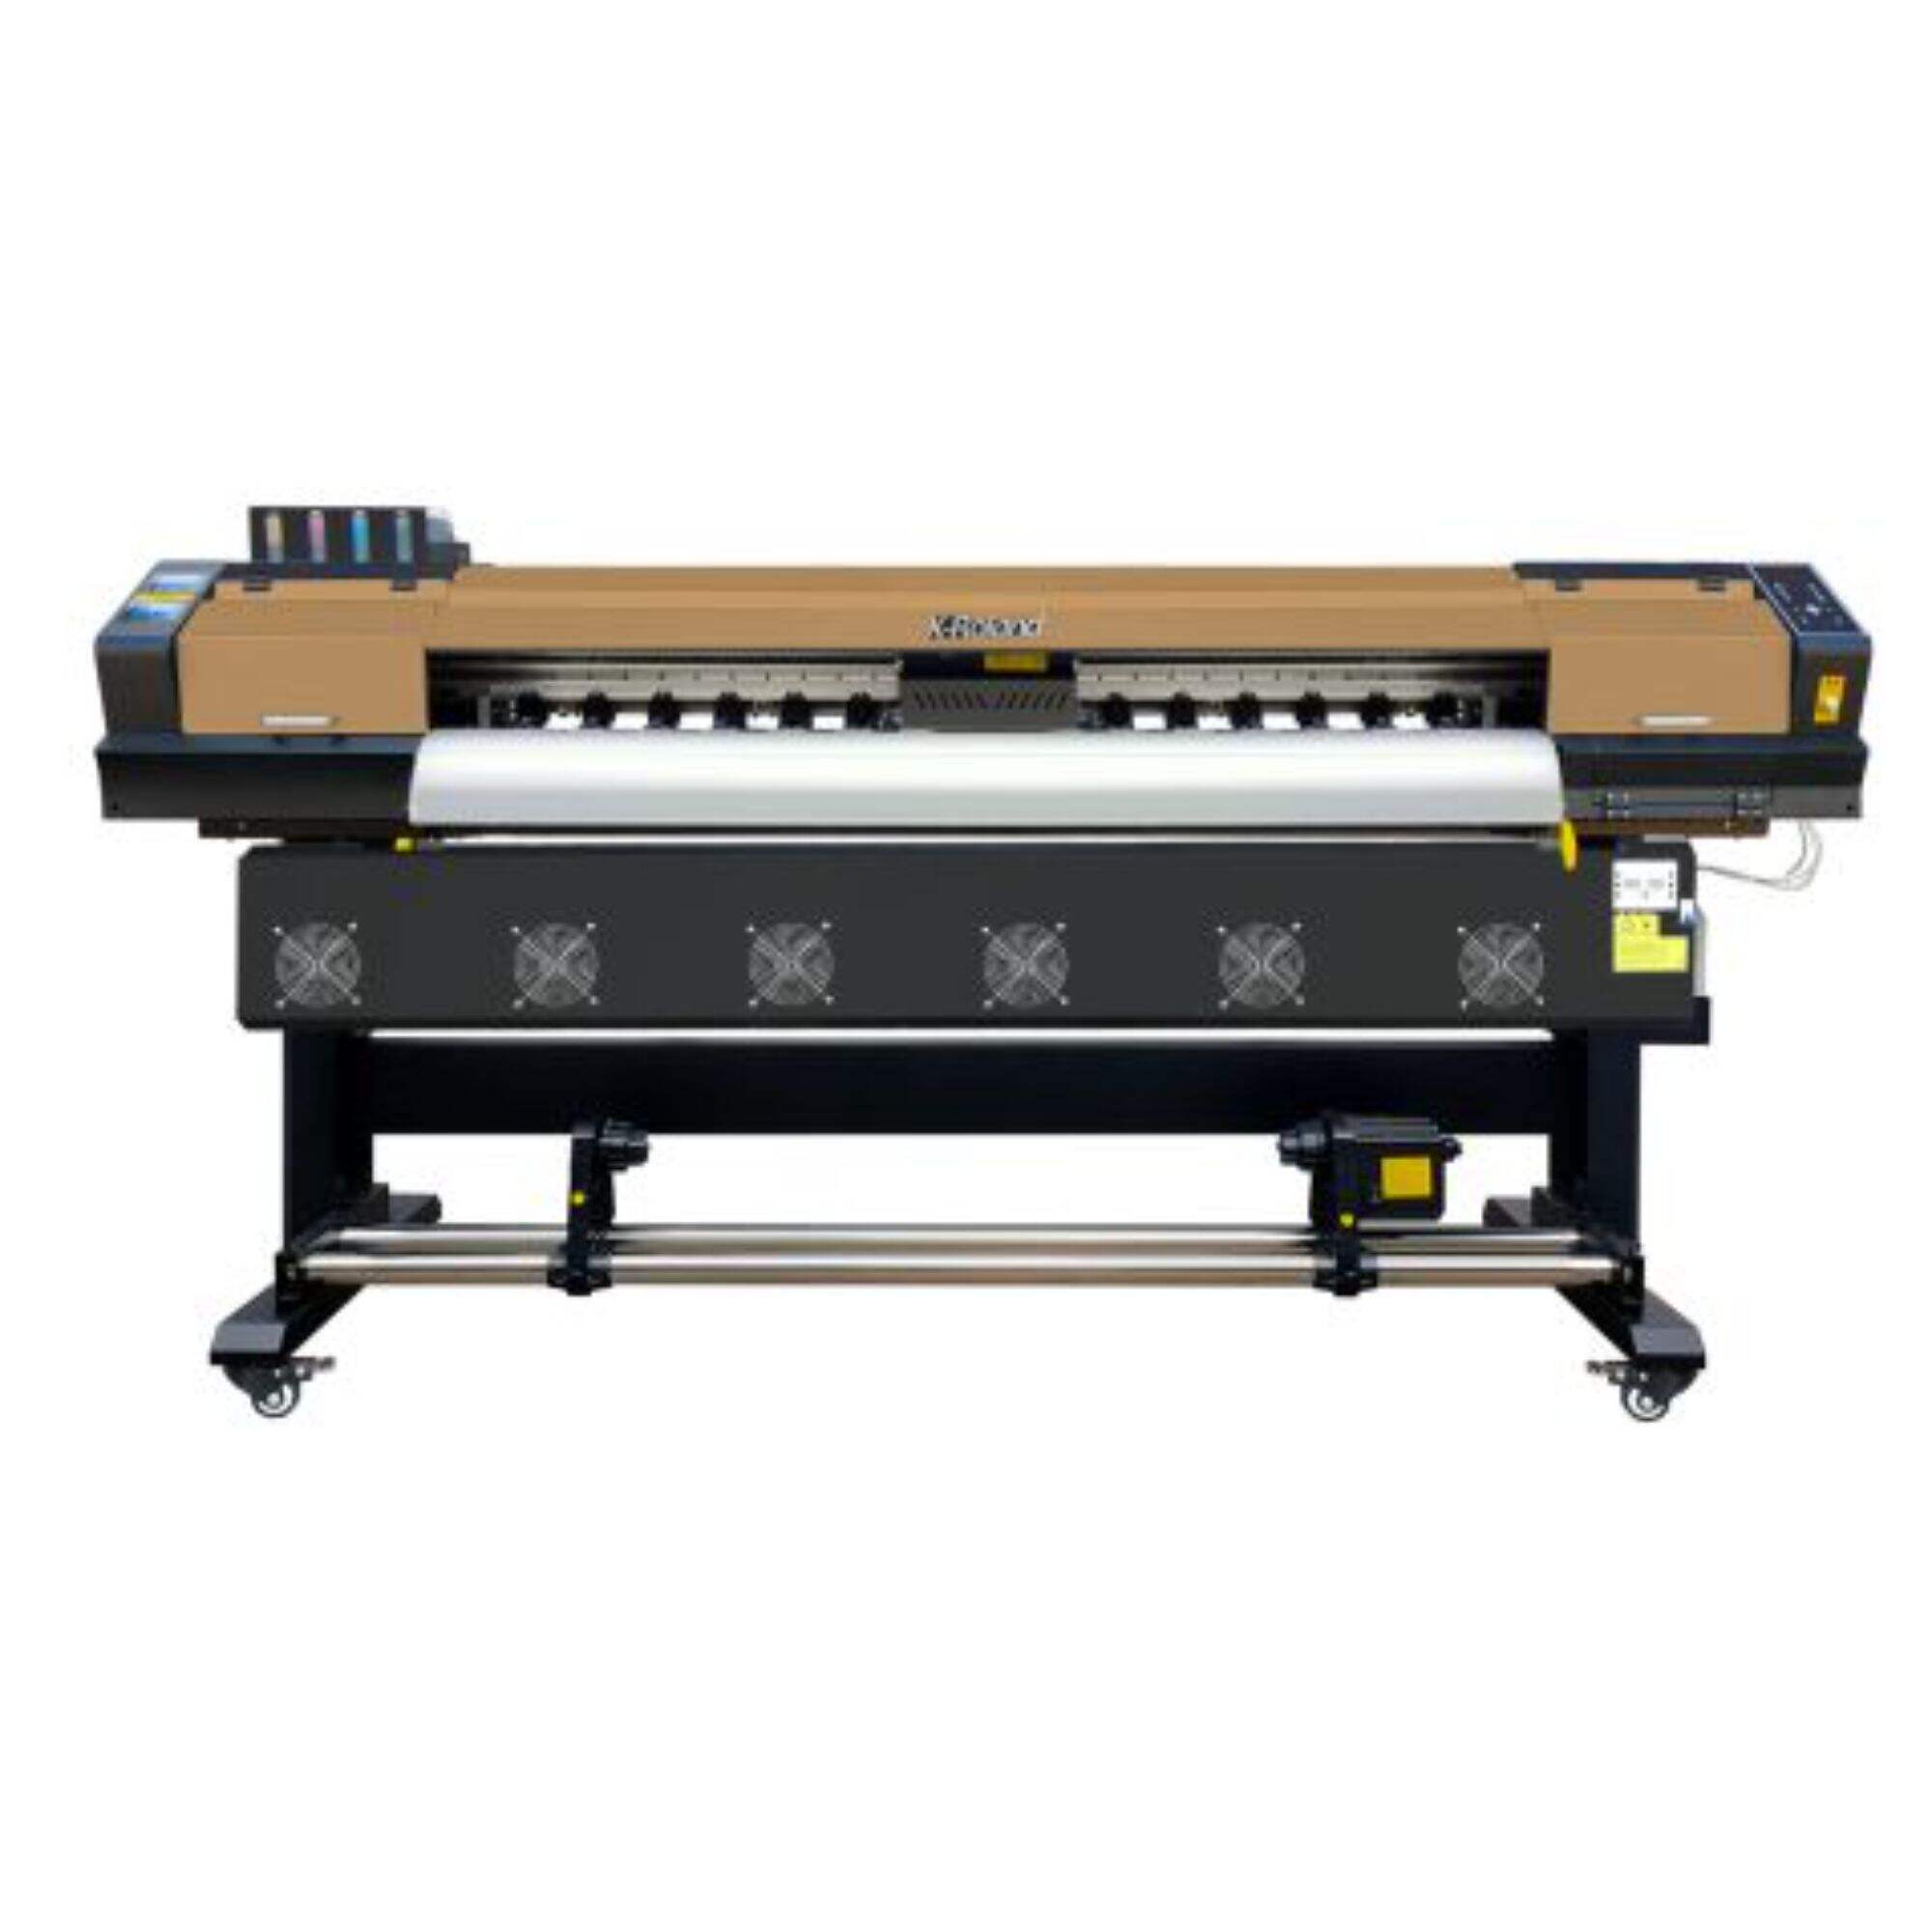 XL-1680Q,1930Q,2200Q Indoor/outdoor printer